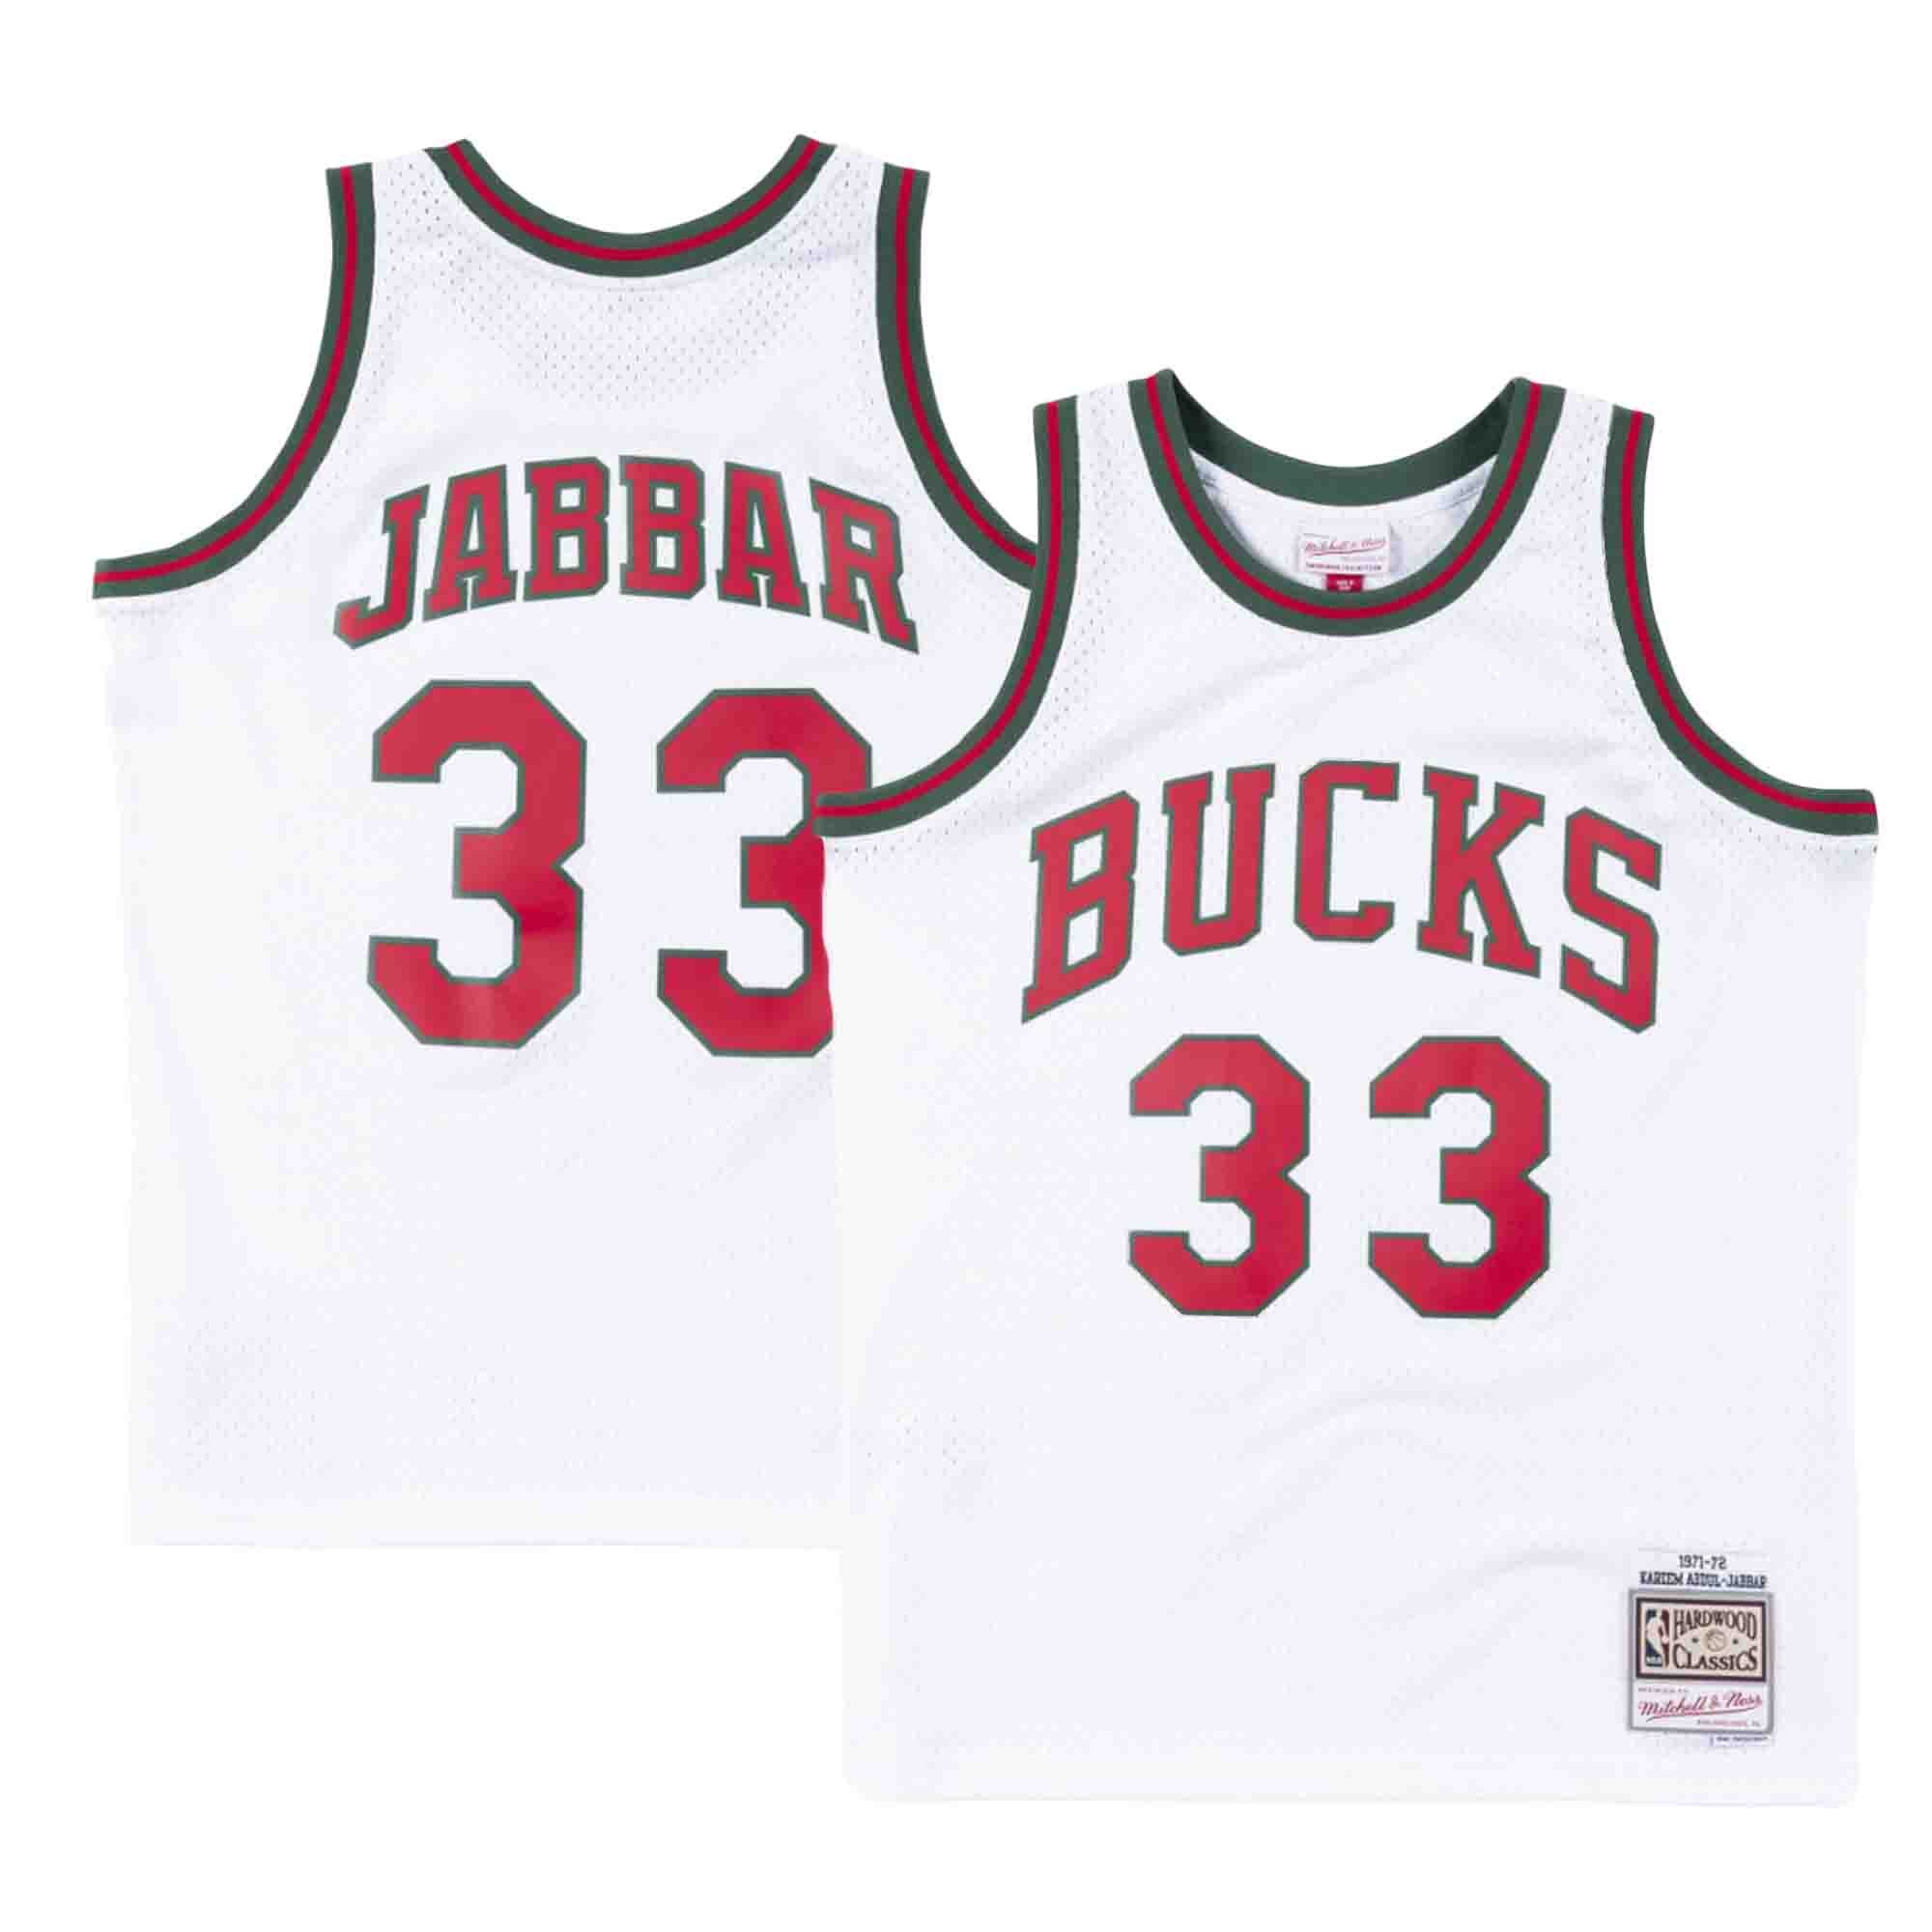 Kareem Abdul-Jabbar Jersey, Kareem Abdul-Jabbar Shirts, Apparel